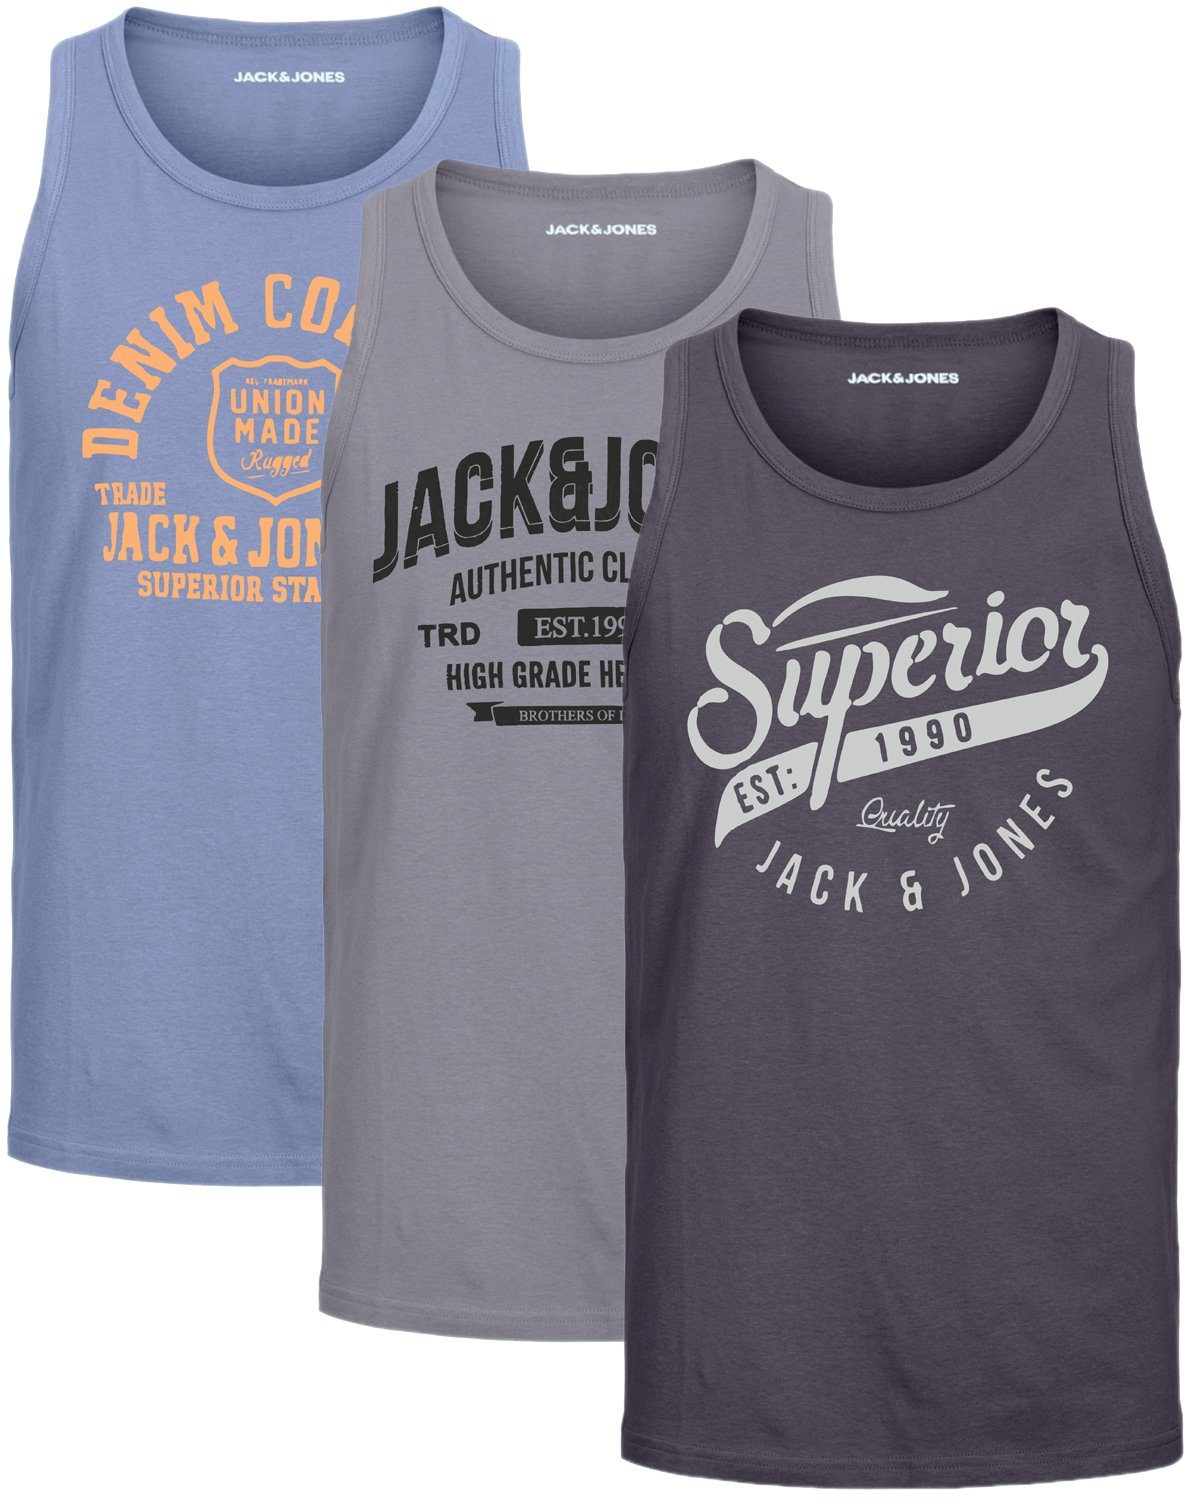 Jack & Jones Tanktop Bequemes Slimfit Shirt mit Printdruck (3er-Pack) unifarbenes Oberteil aus Baumwolle, Розмір L